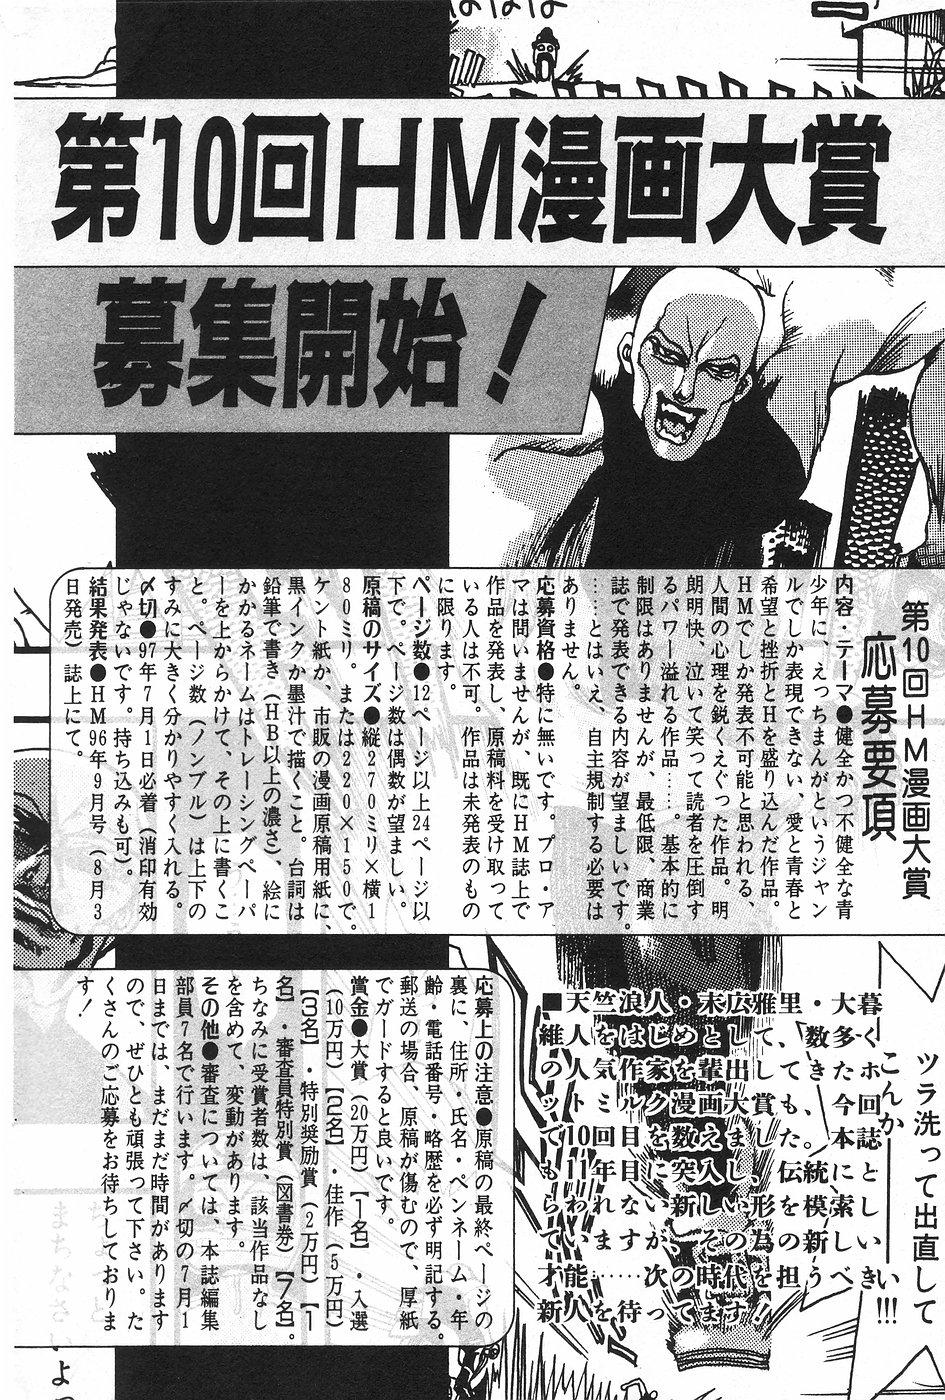 Manga Hotmilk 1997-04 52